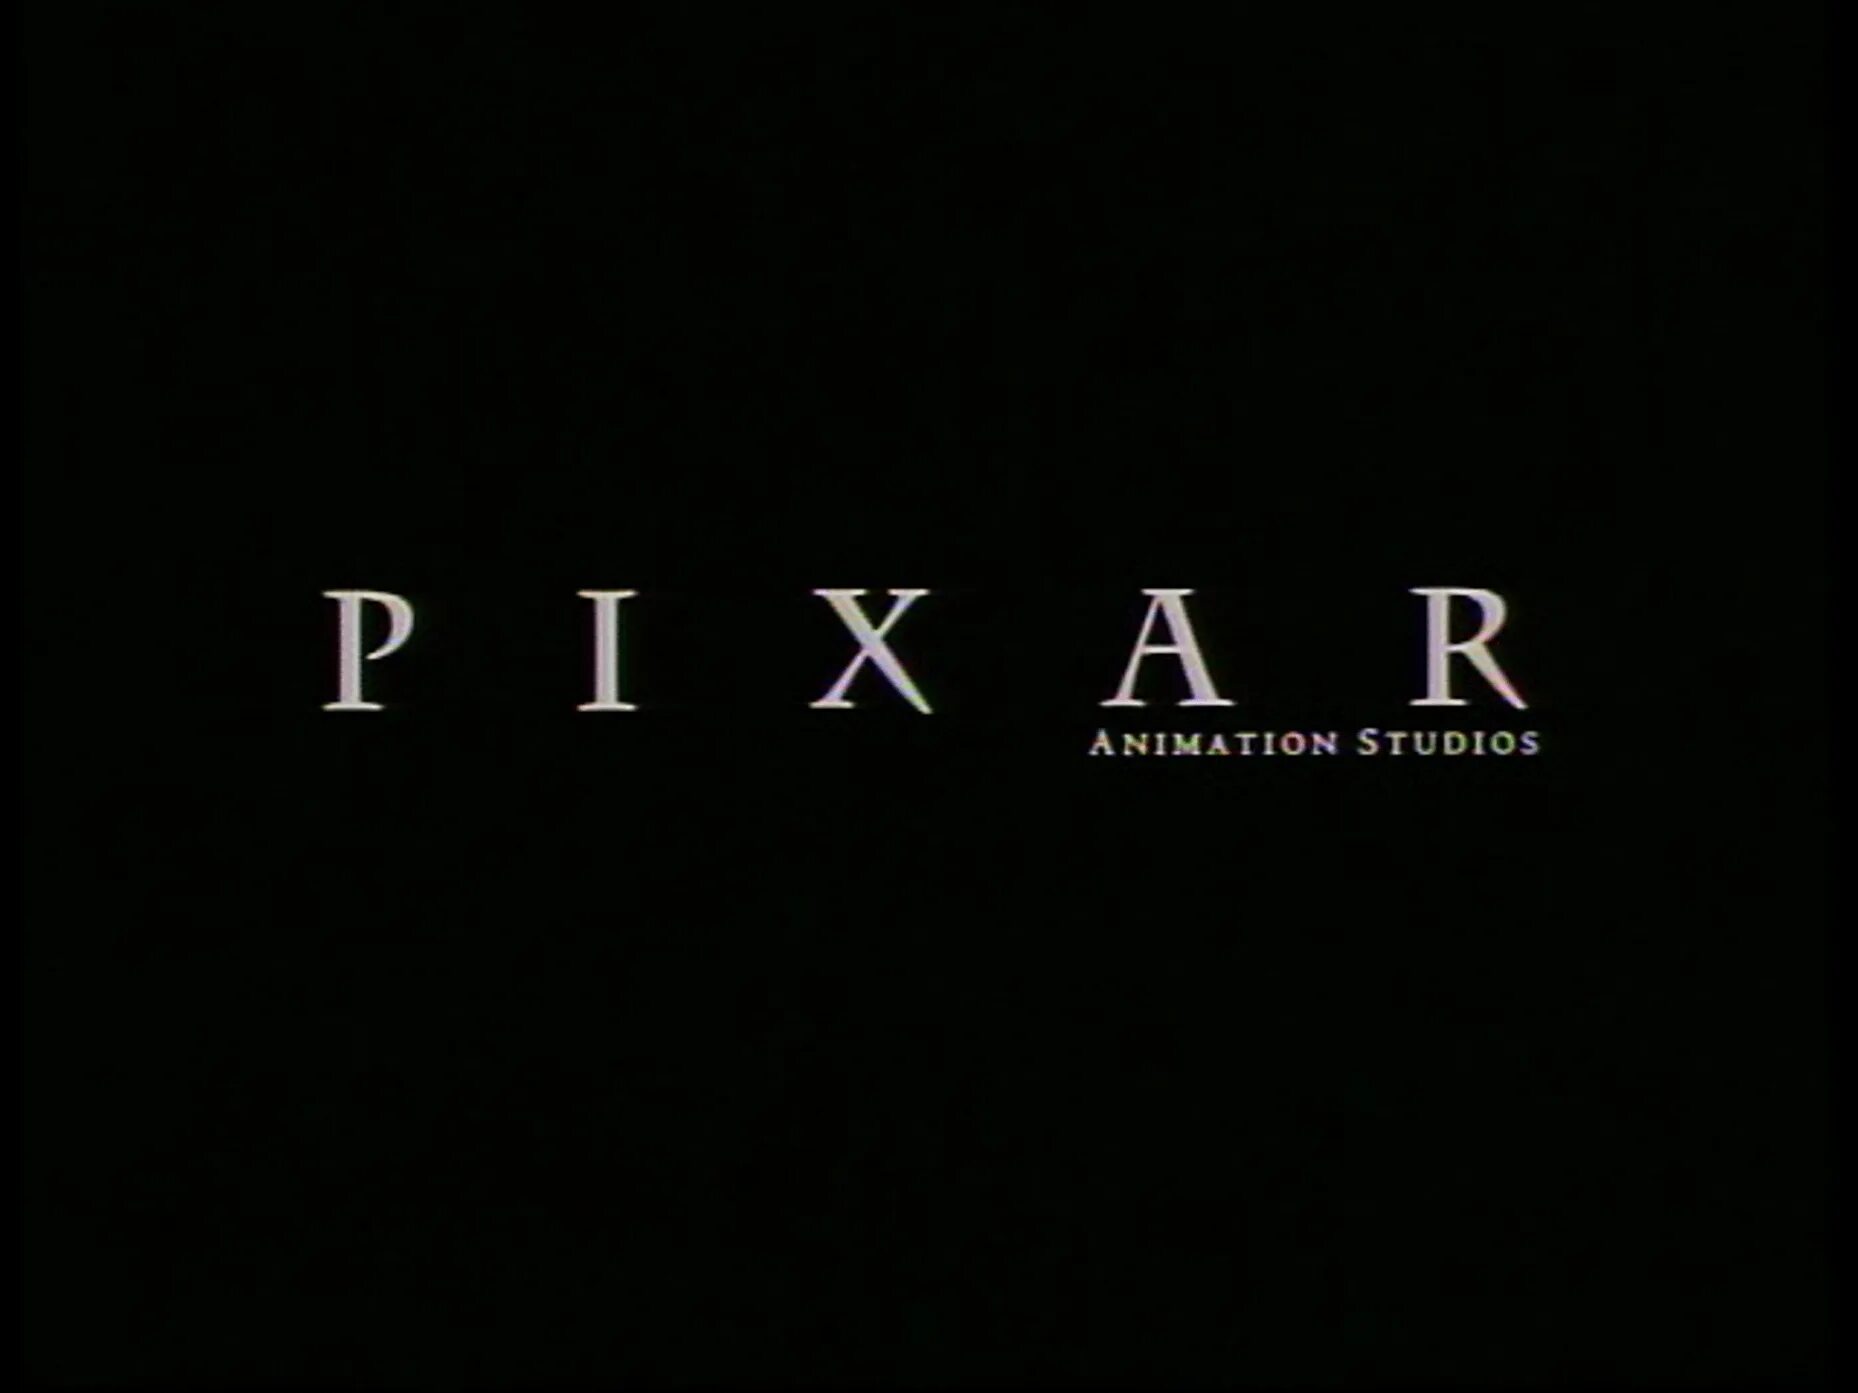 Pixar logo. Pixar логотип. Пиксар студия лого. Пиксар анимейшен студио. Логотип animation Studios.